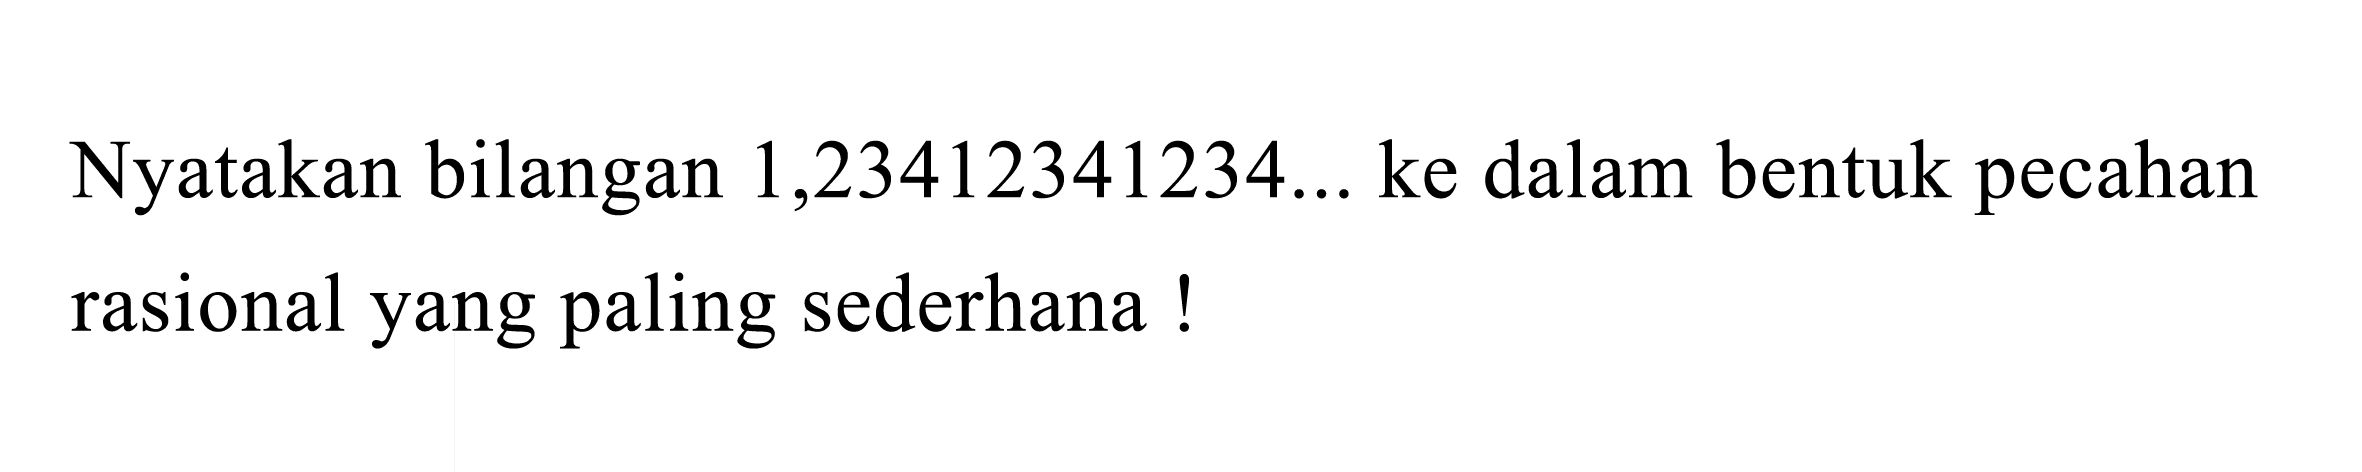 Nyatakan bilangan  1,23412341234 ...  ke dalam bentuk pecahan rasional yang paling sederhana!